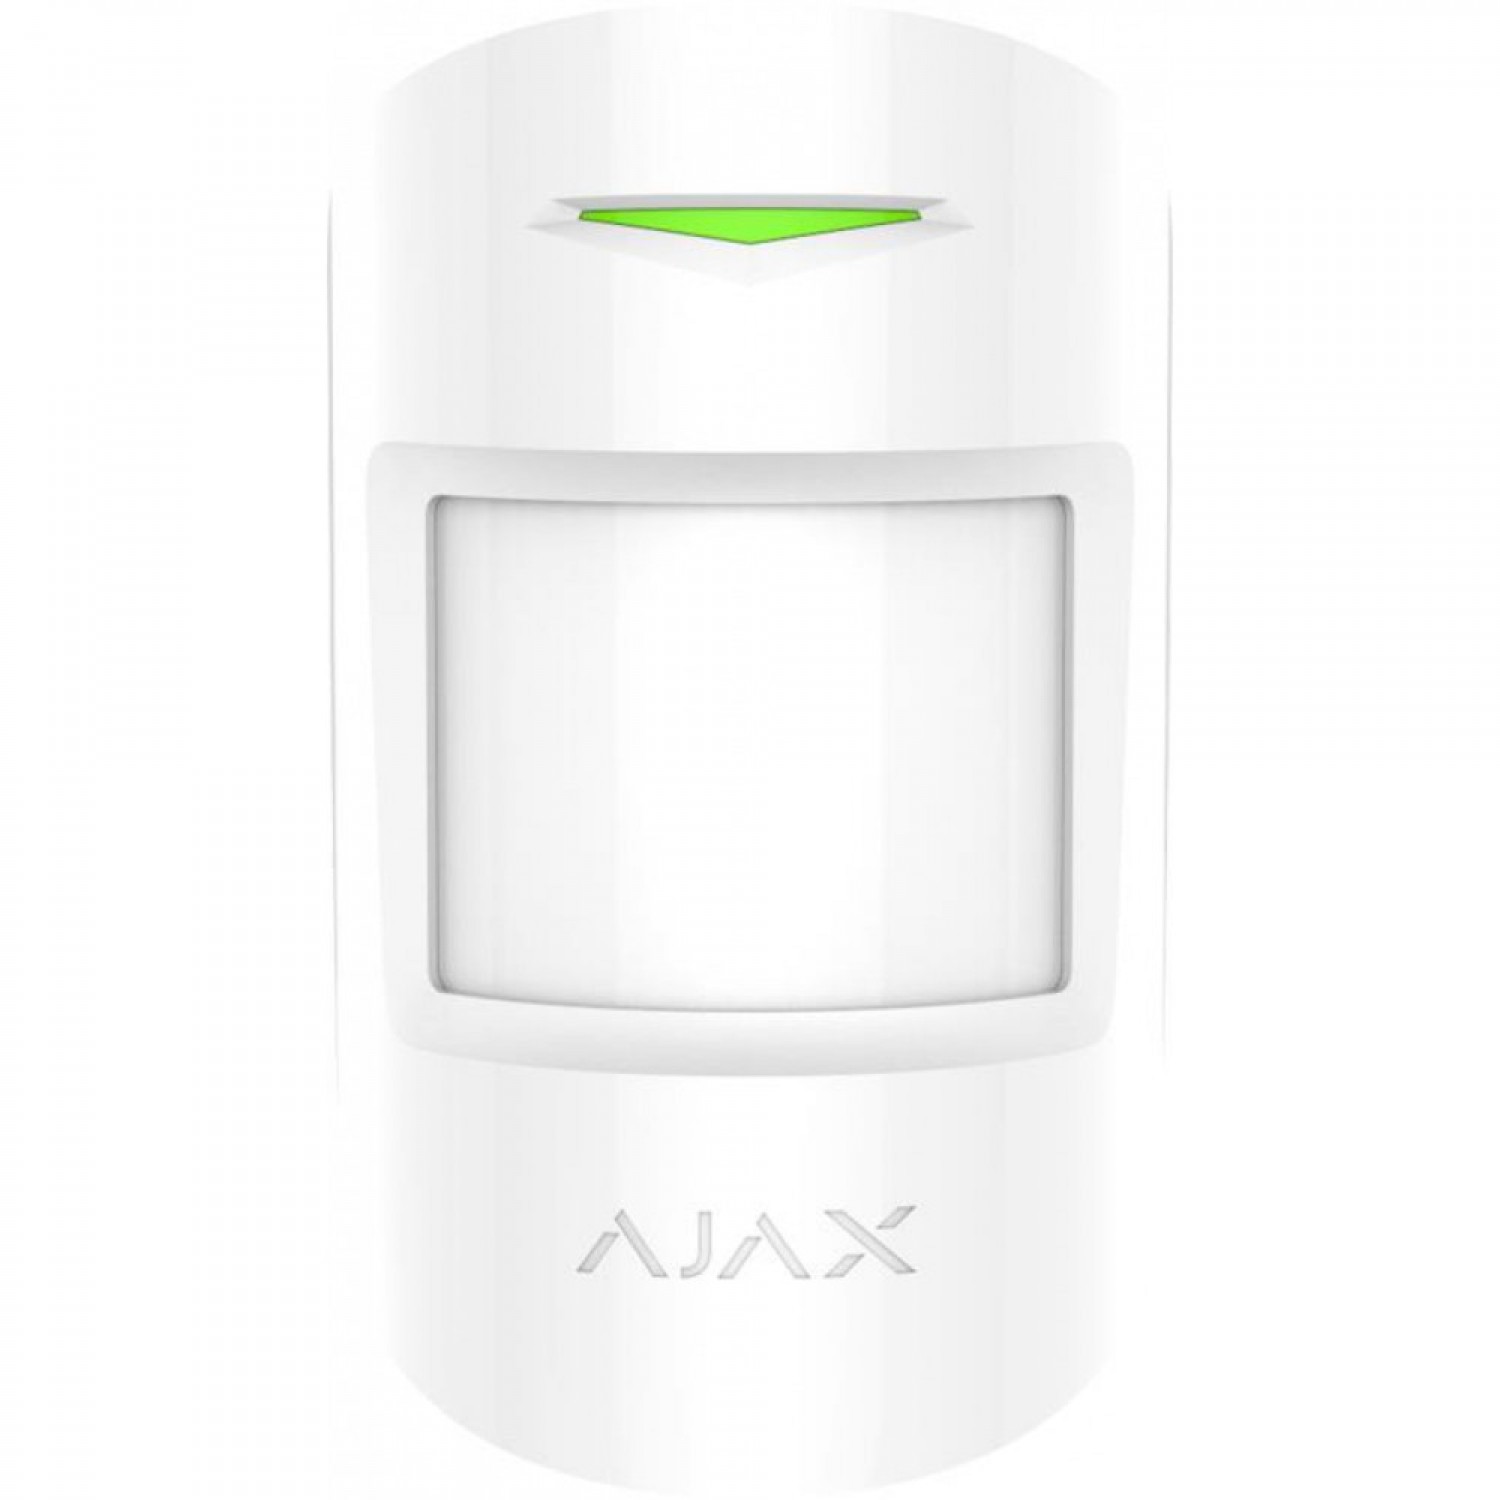 alt_image Компонент Ajax 1658 MotionProtect Plus white датчик движения с микроволновым сенсором 1151